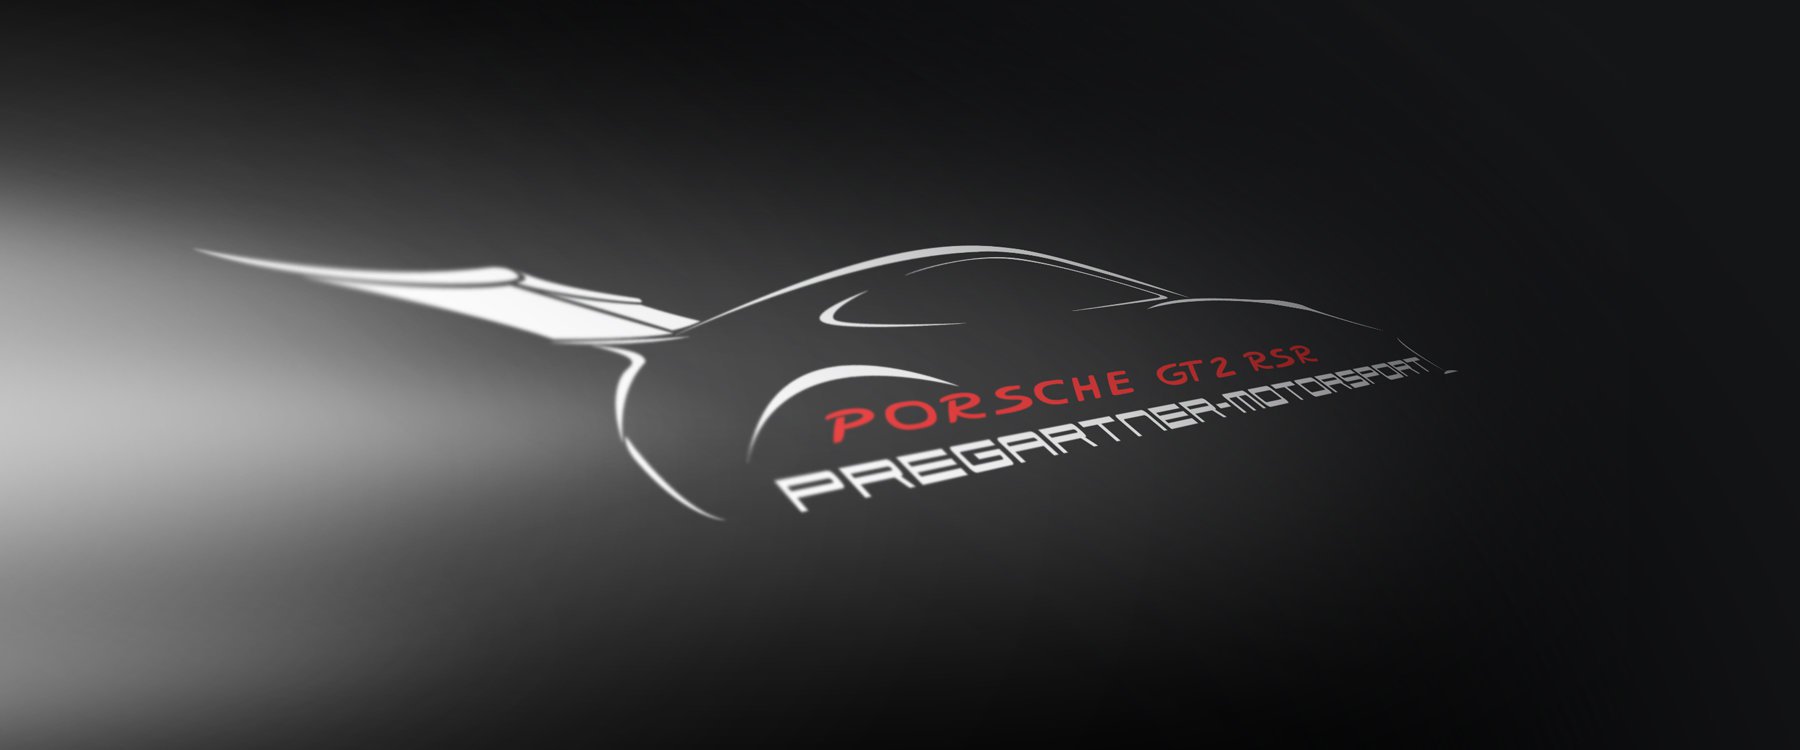 Porsche GT2 RSR Pregartner Motorsport #4